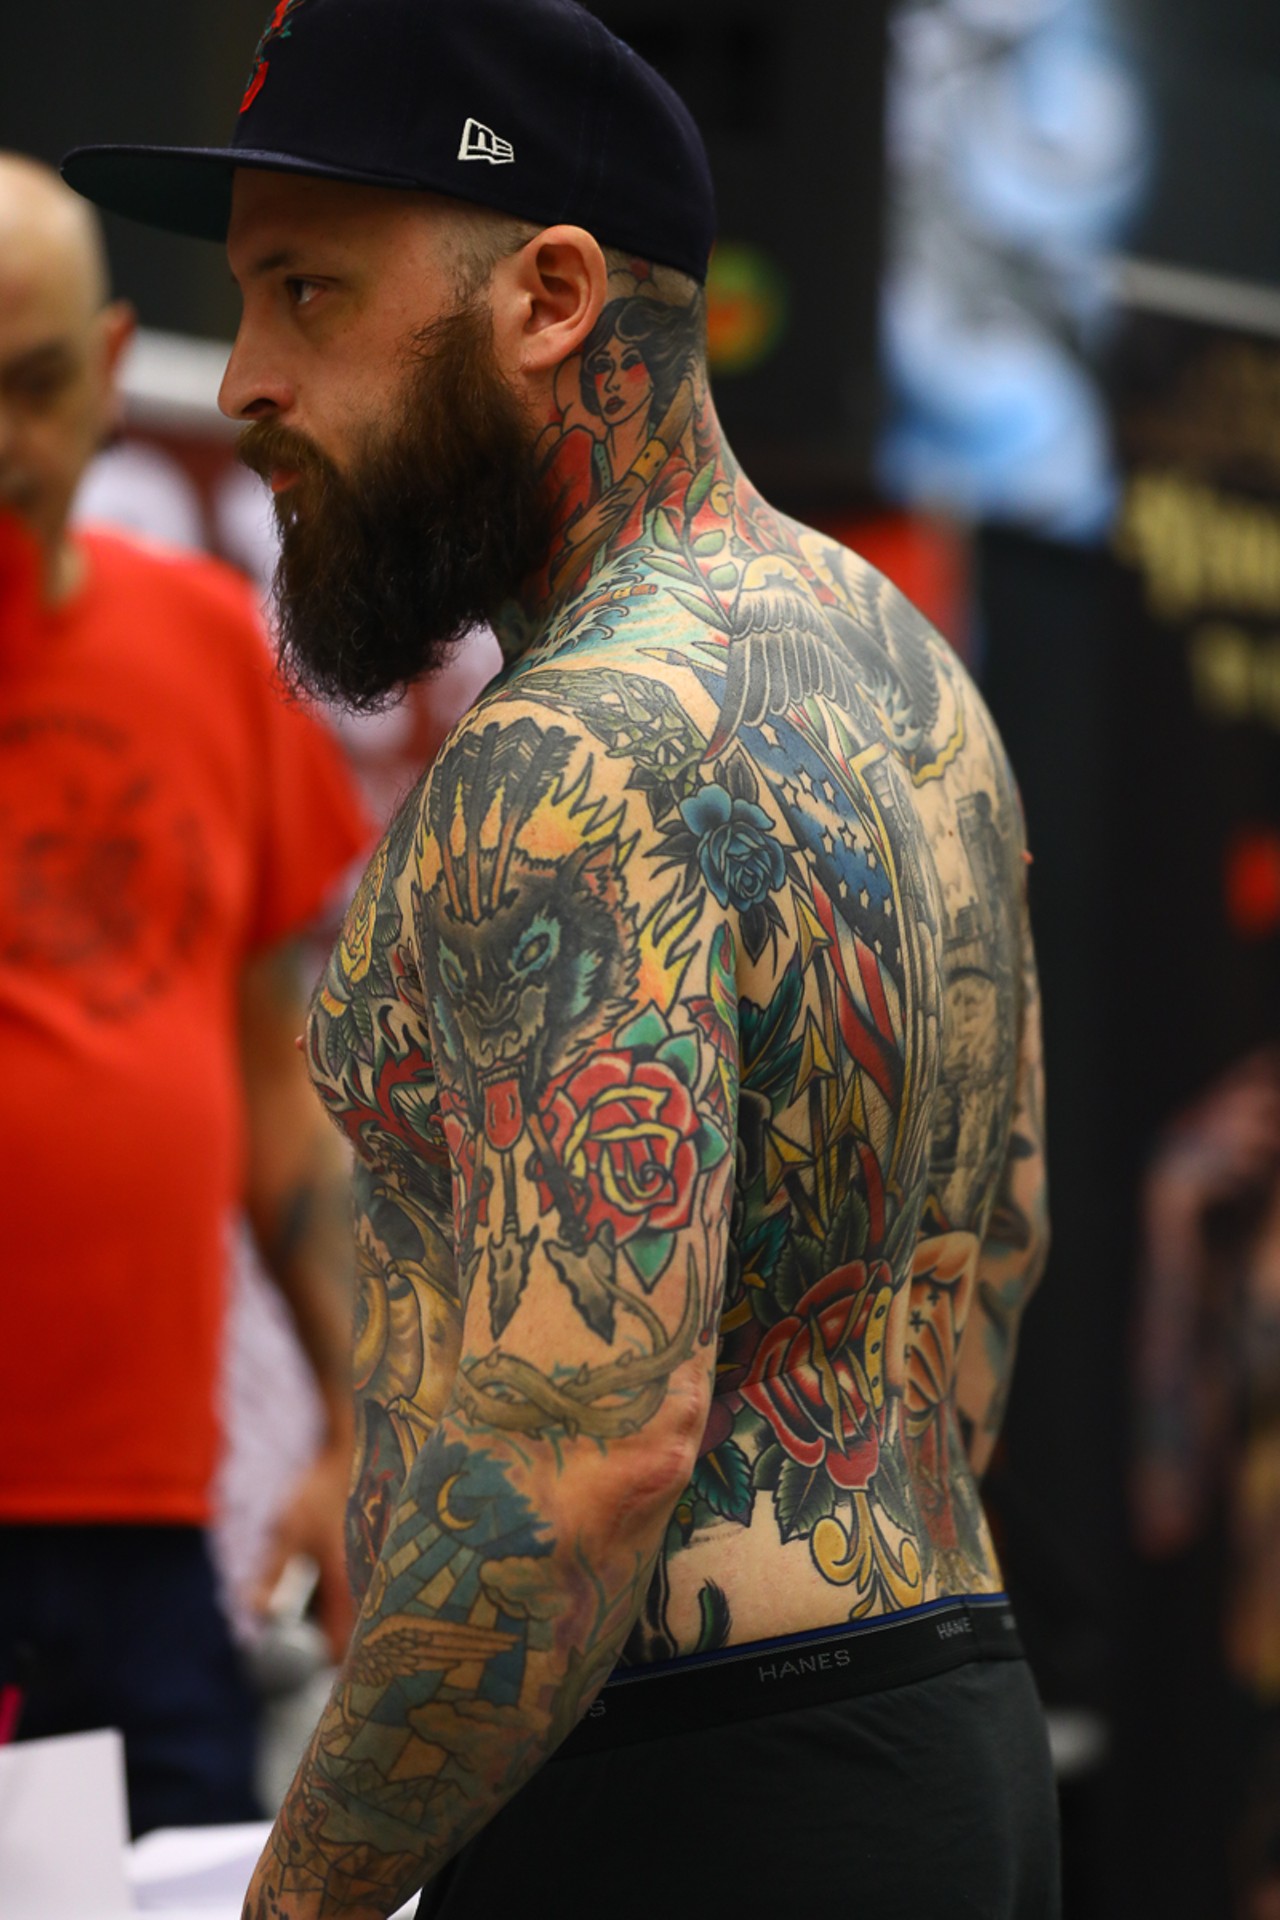 Milano Tattoo Convention 2022 | Killer Ink Tattoo - YouTube